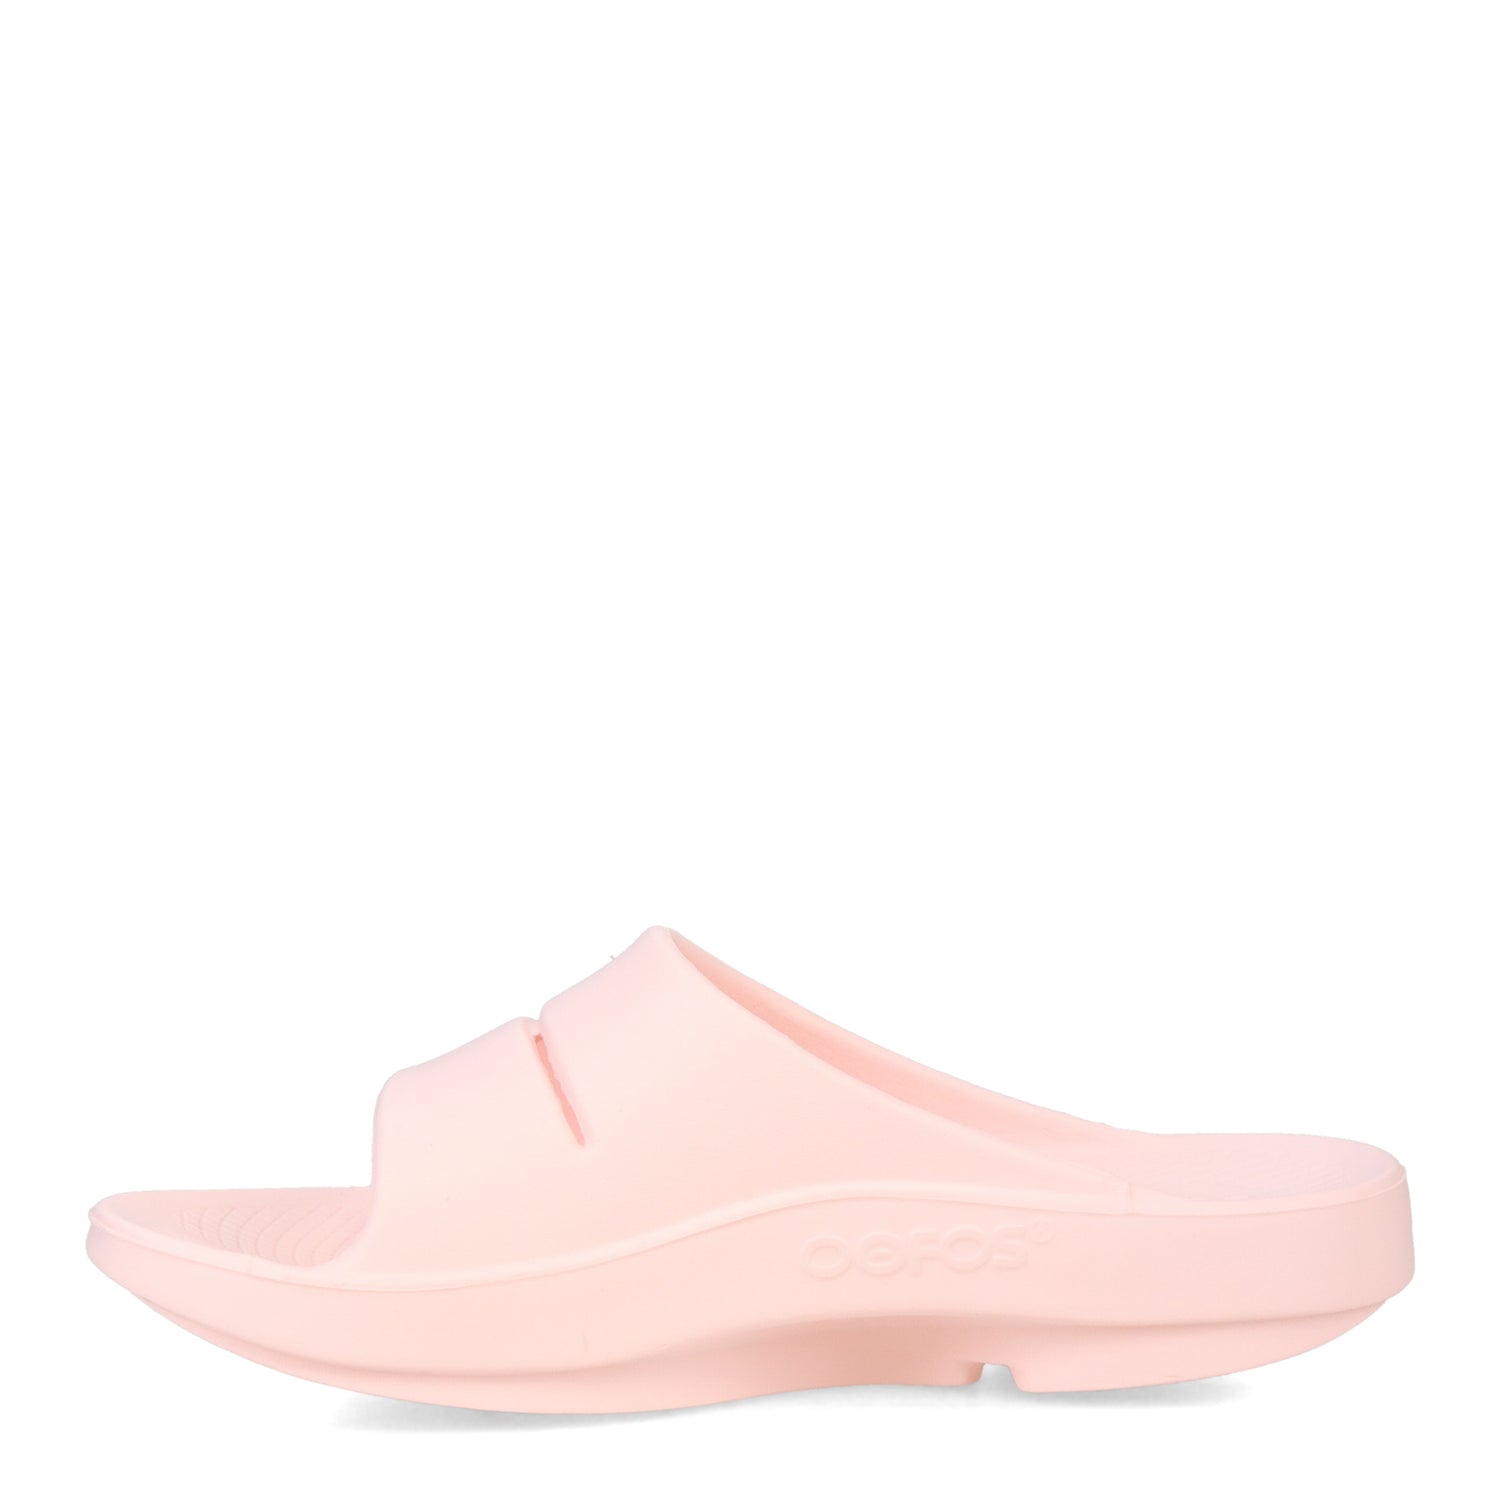 Peltz Shoes  Women's Oofos OOahh Slide Sandal Blush 1100-BLUSH